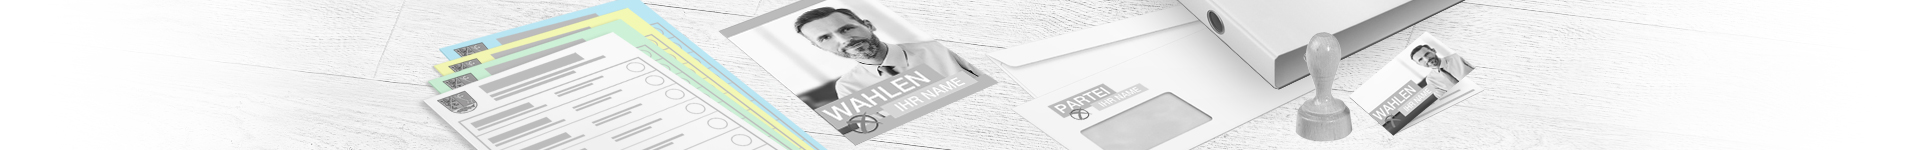 Wahl-Flyer